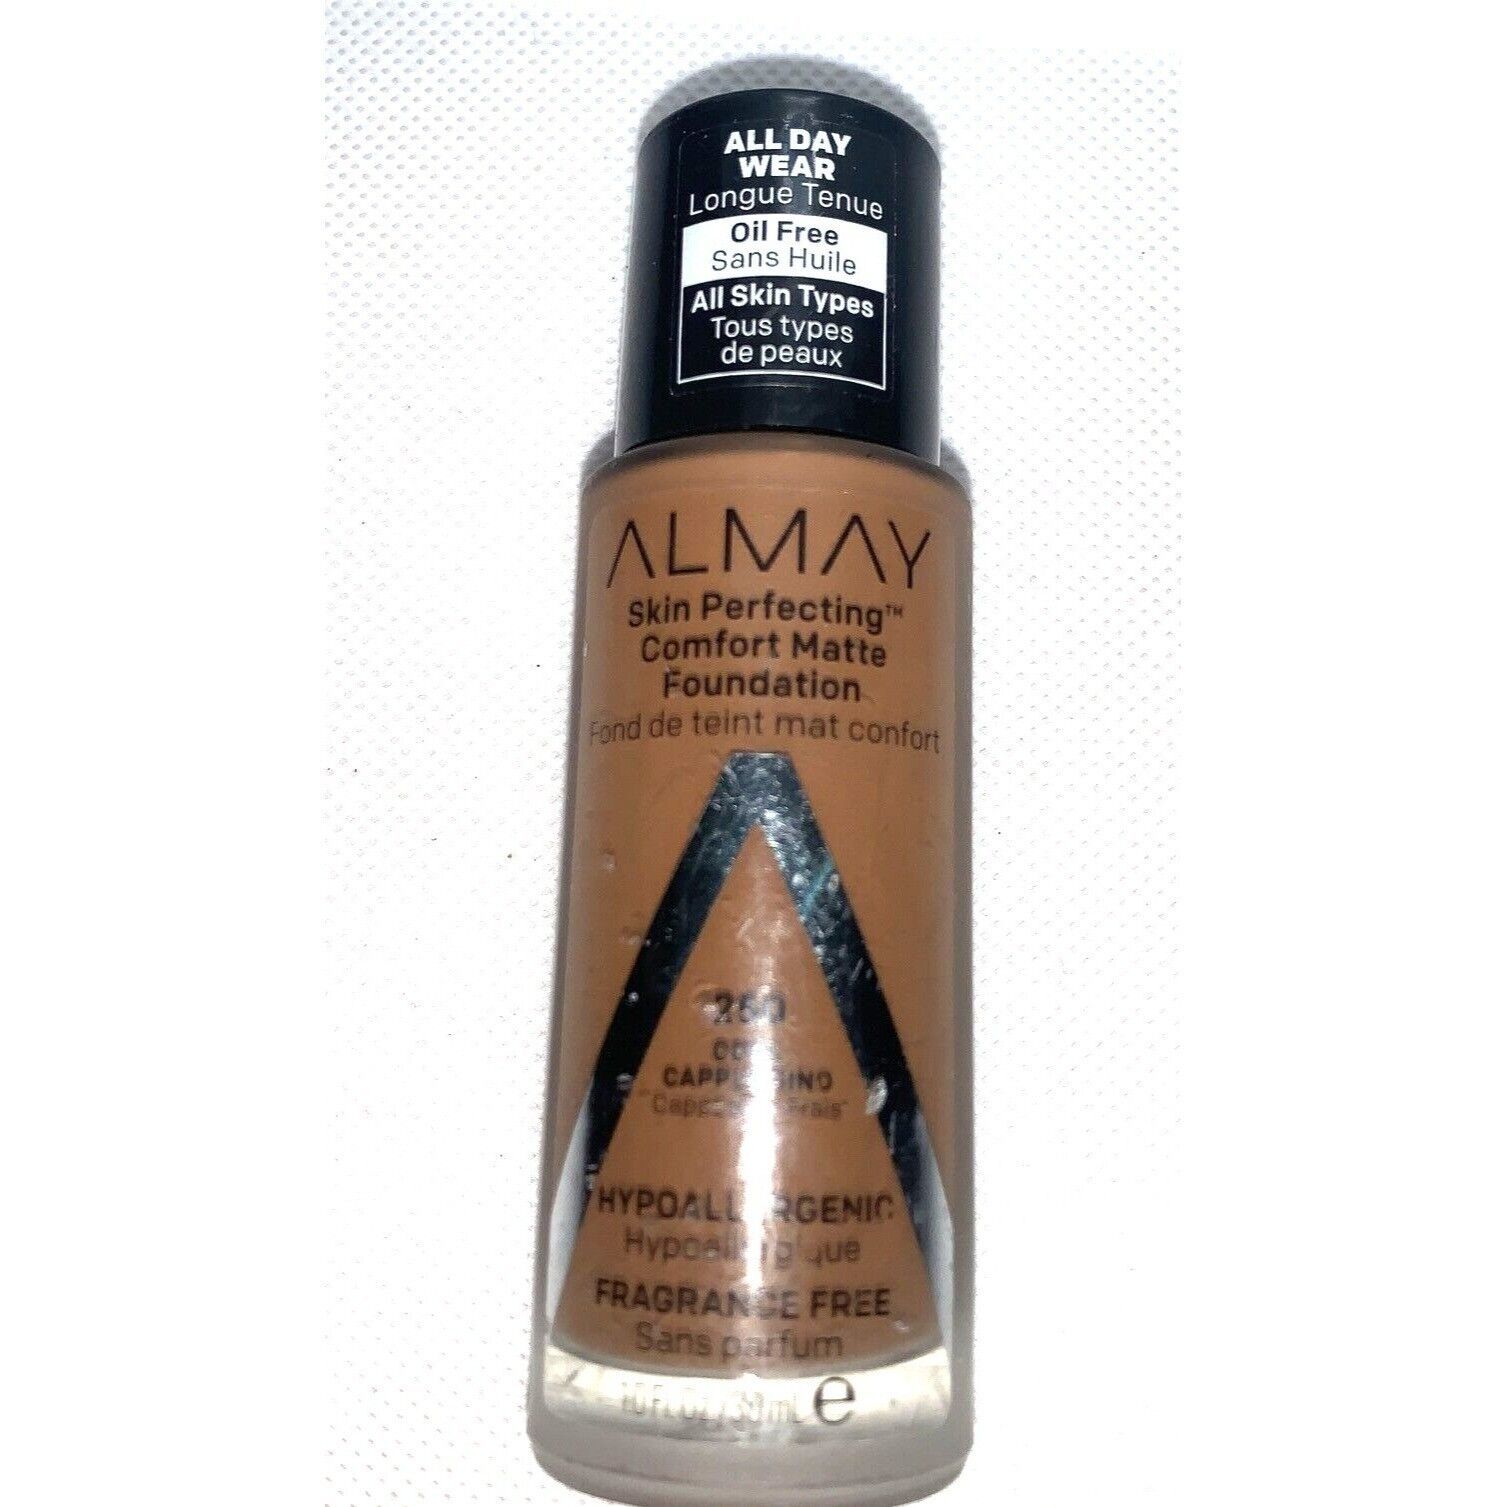 Almay Skin Perfecting Liquid Foundation Comfort Matte #250 Cool Cappuccino - $10.00